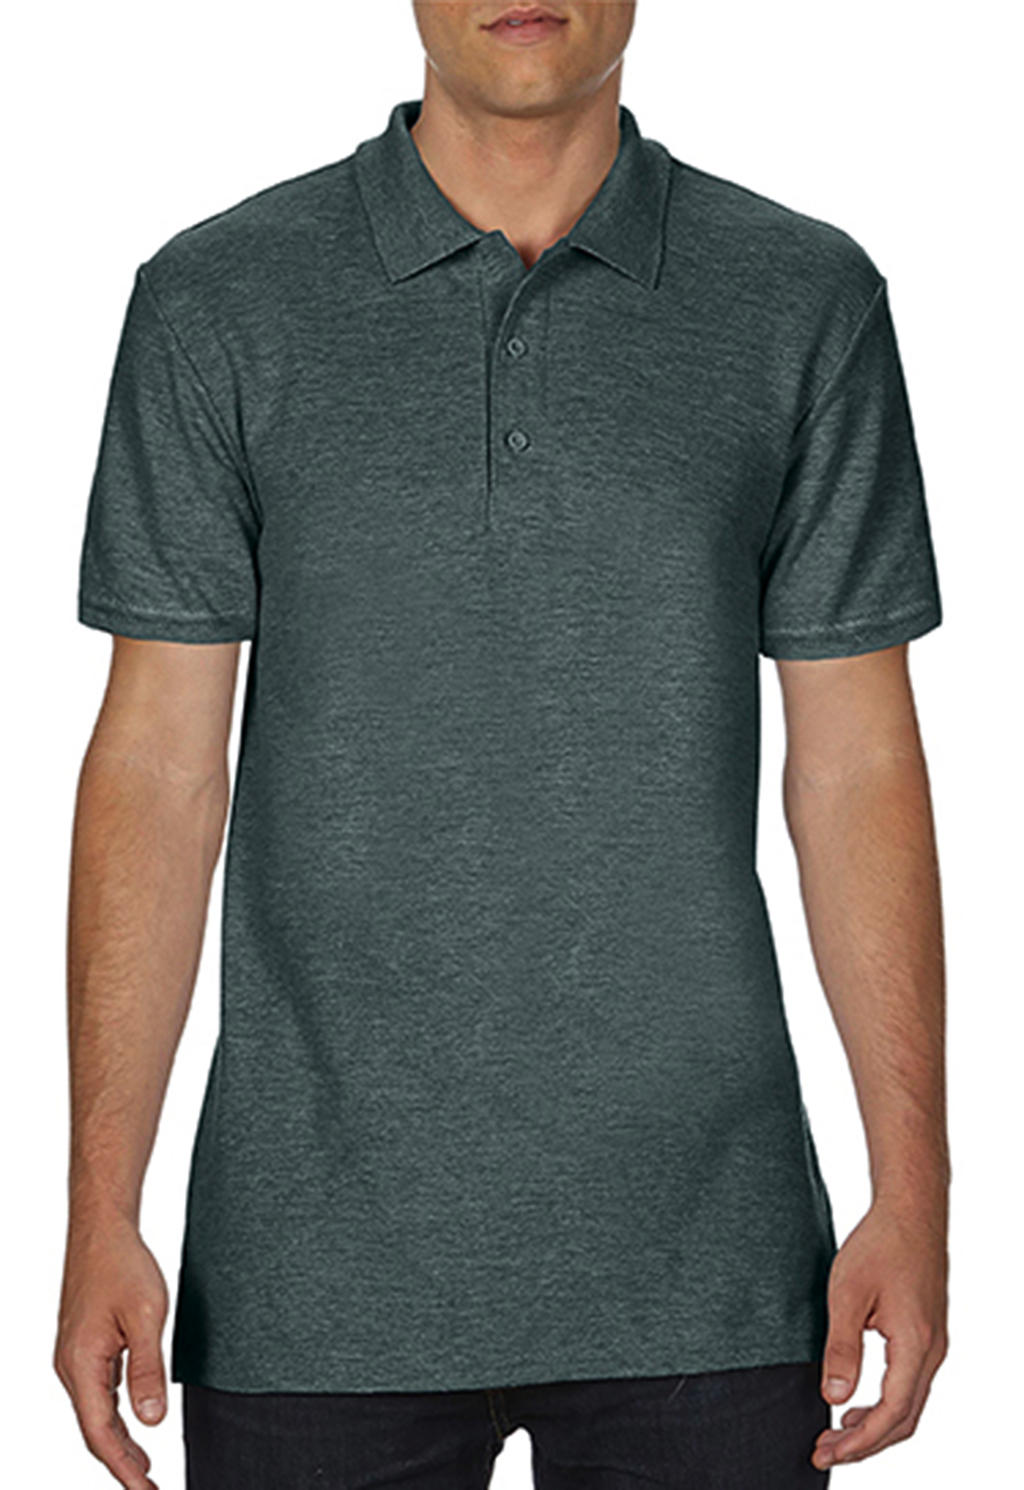 Gildan Herren Polo Shirt T-Shirt Kurzarm Piqué Basic Baumwolle Hemd